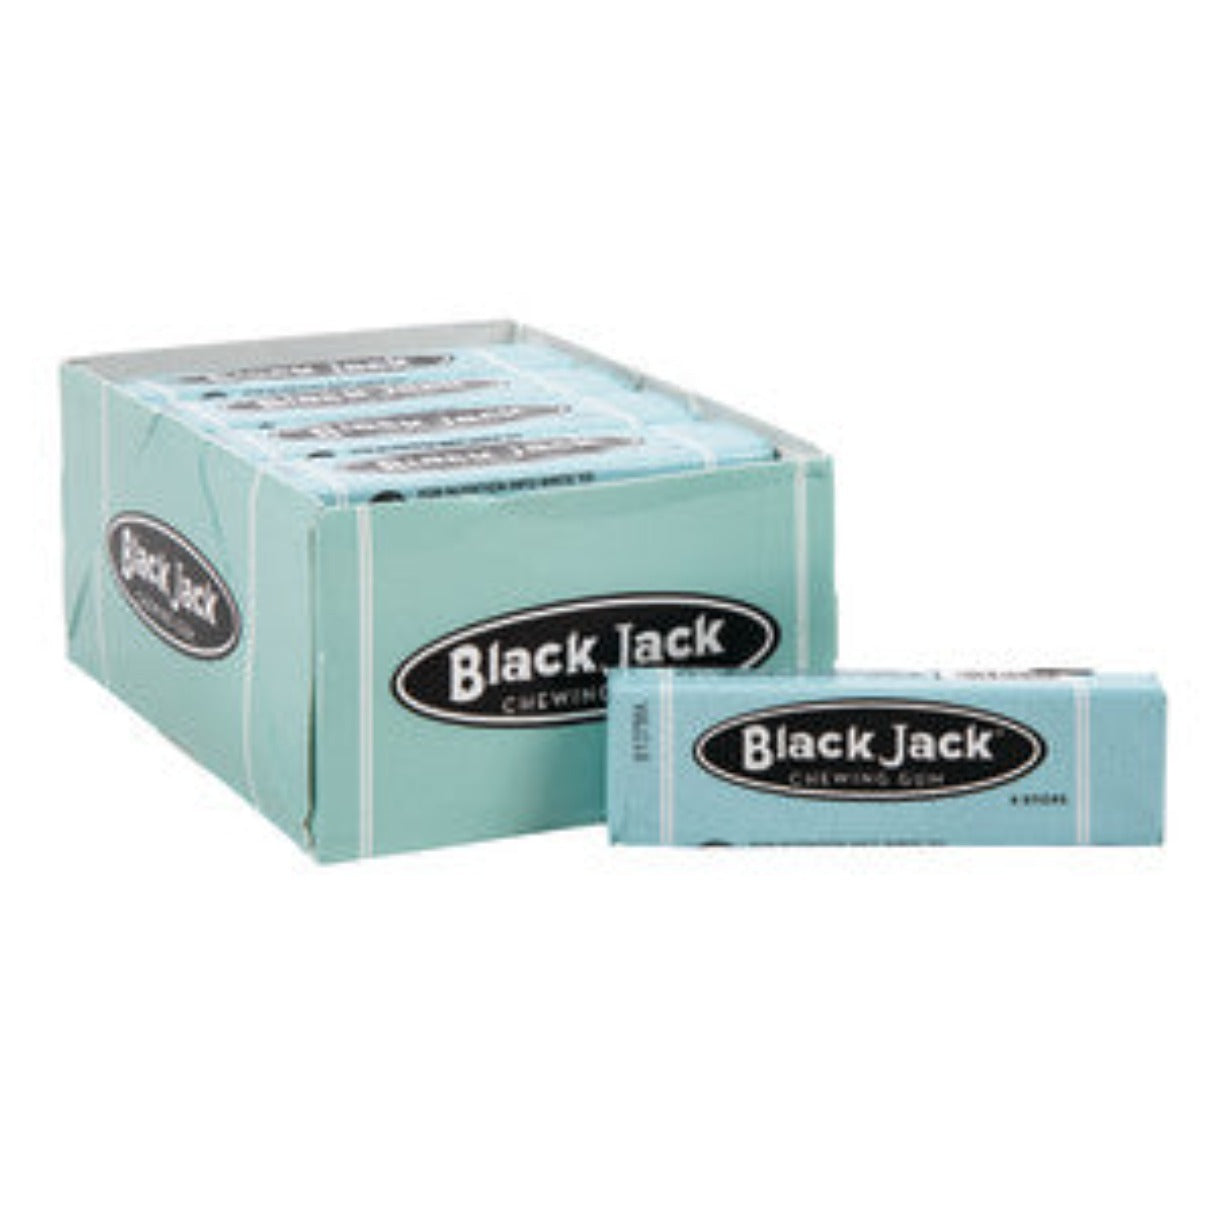 Black Jack Gum Box 0.44oz - 20ct